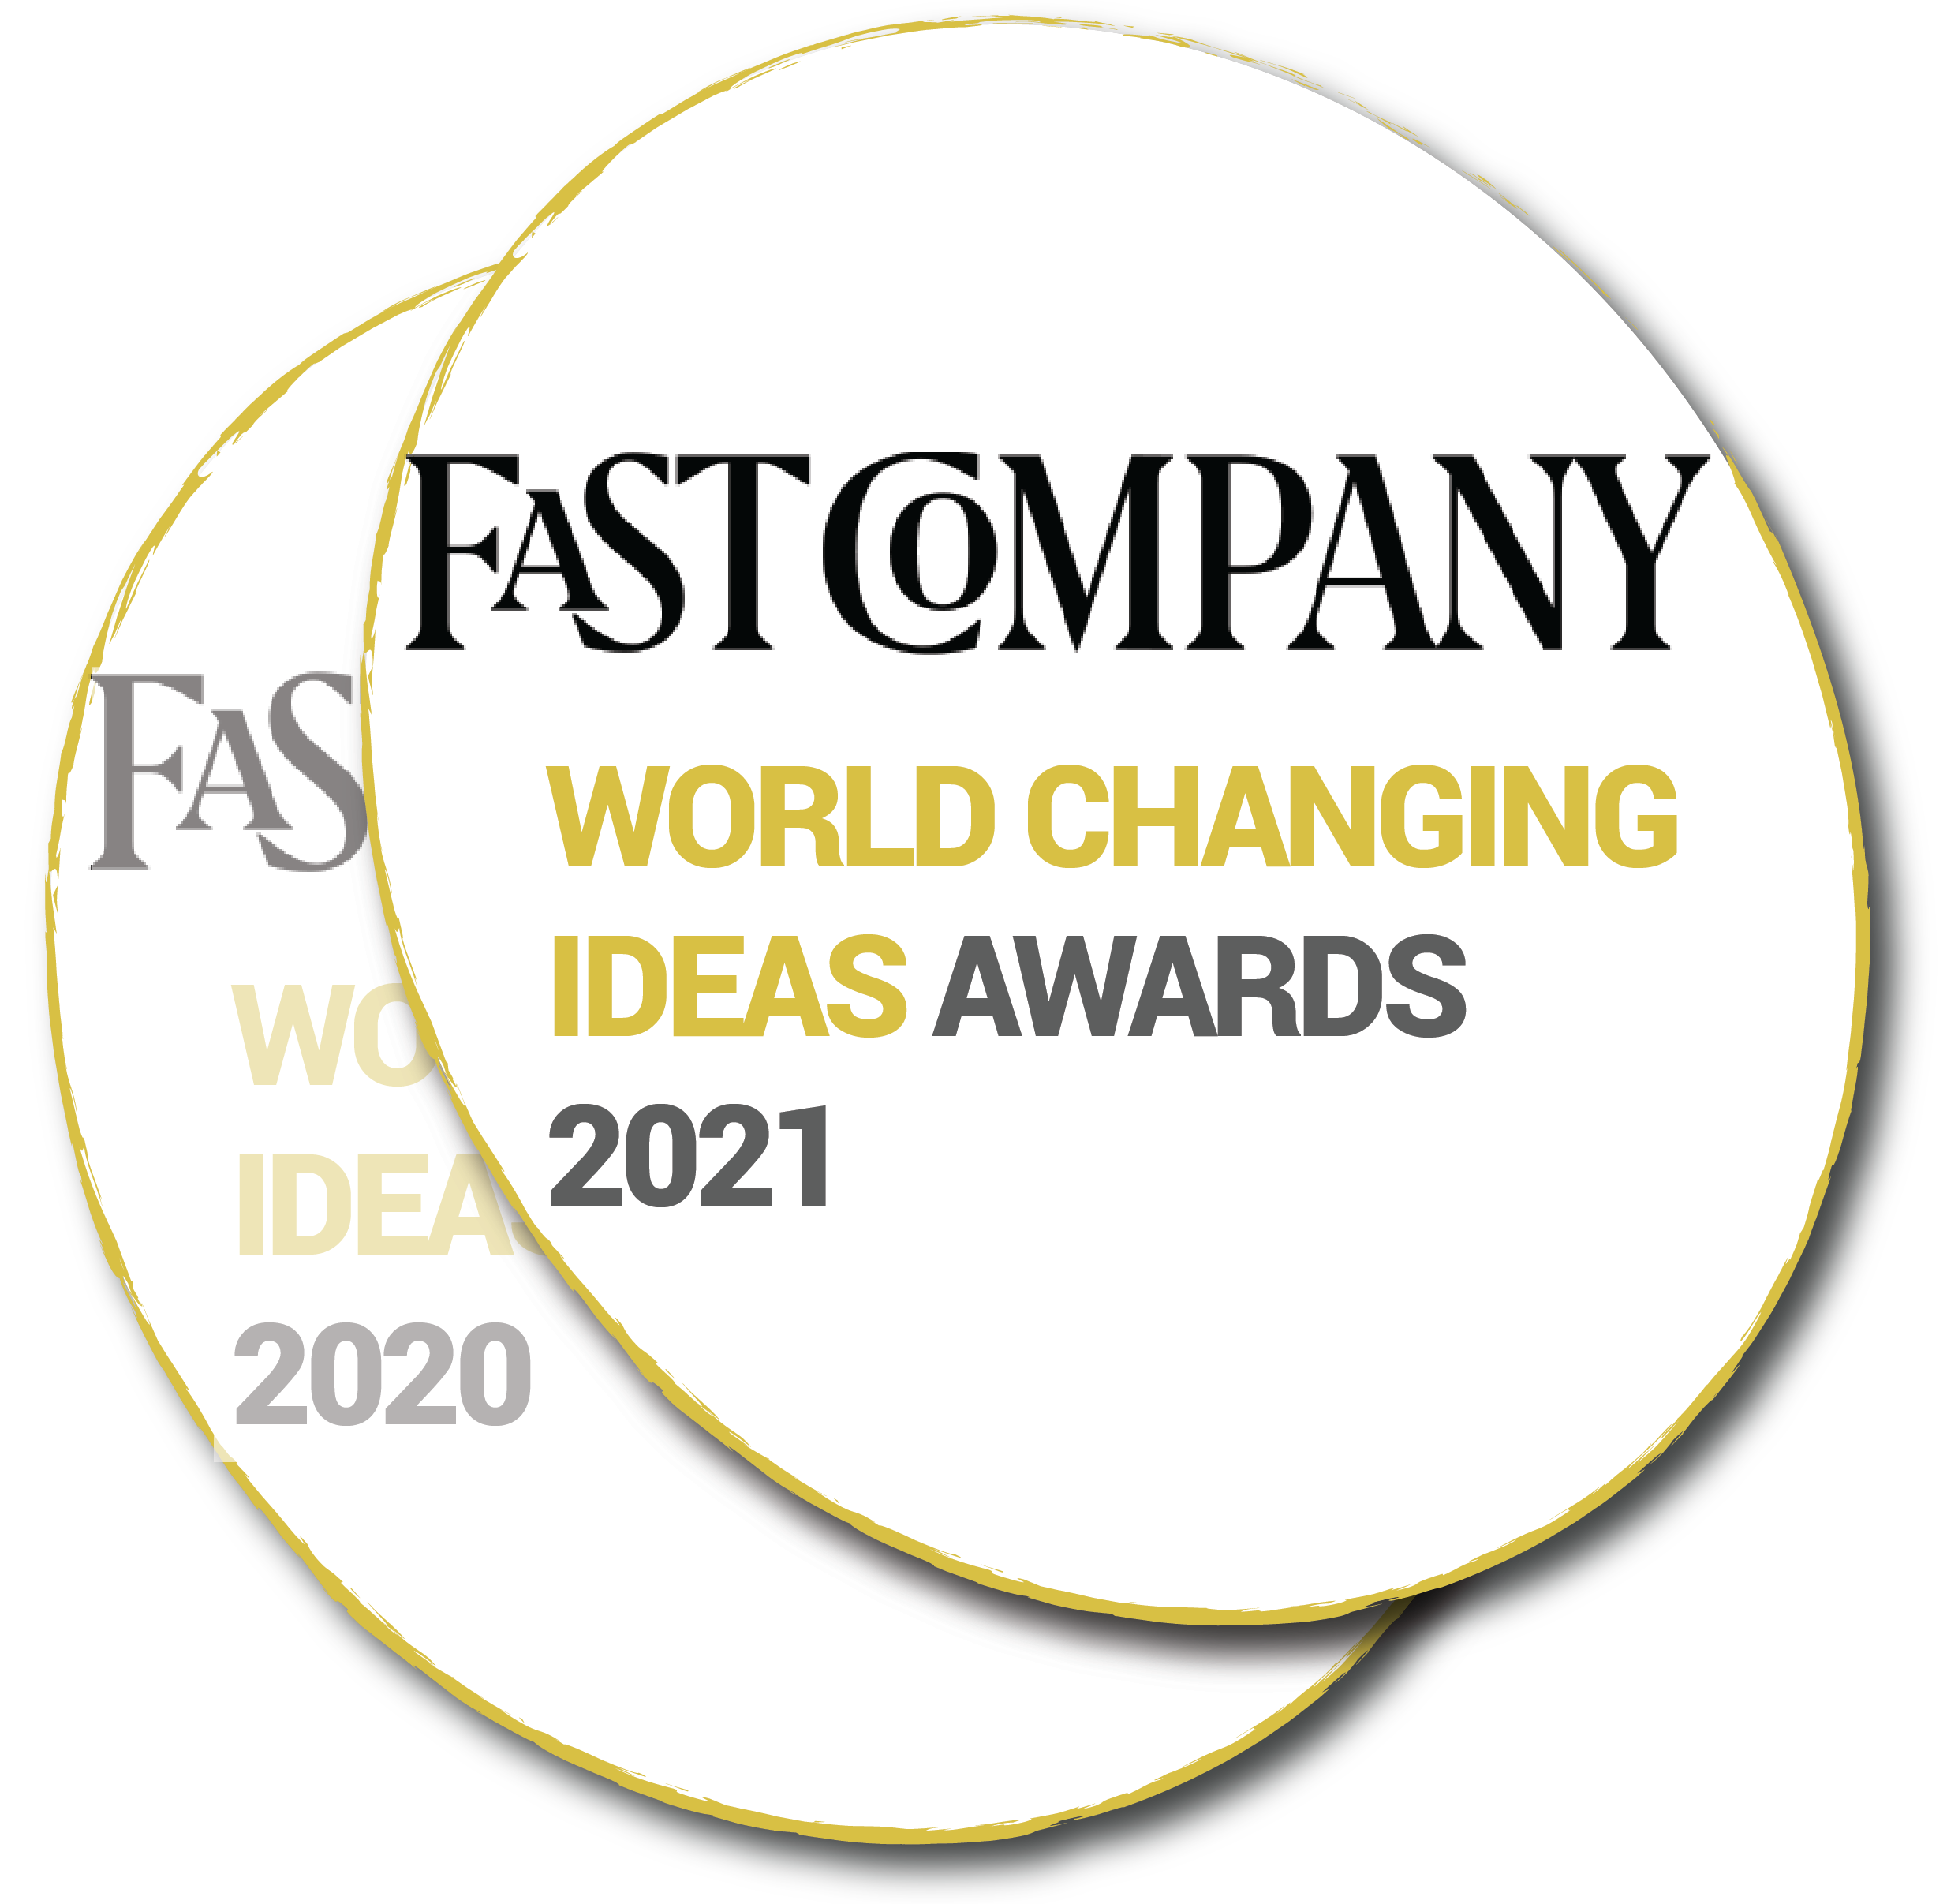 Fast Company World Changing Ideas 2021